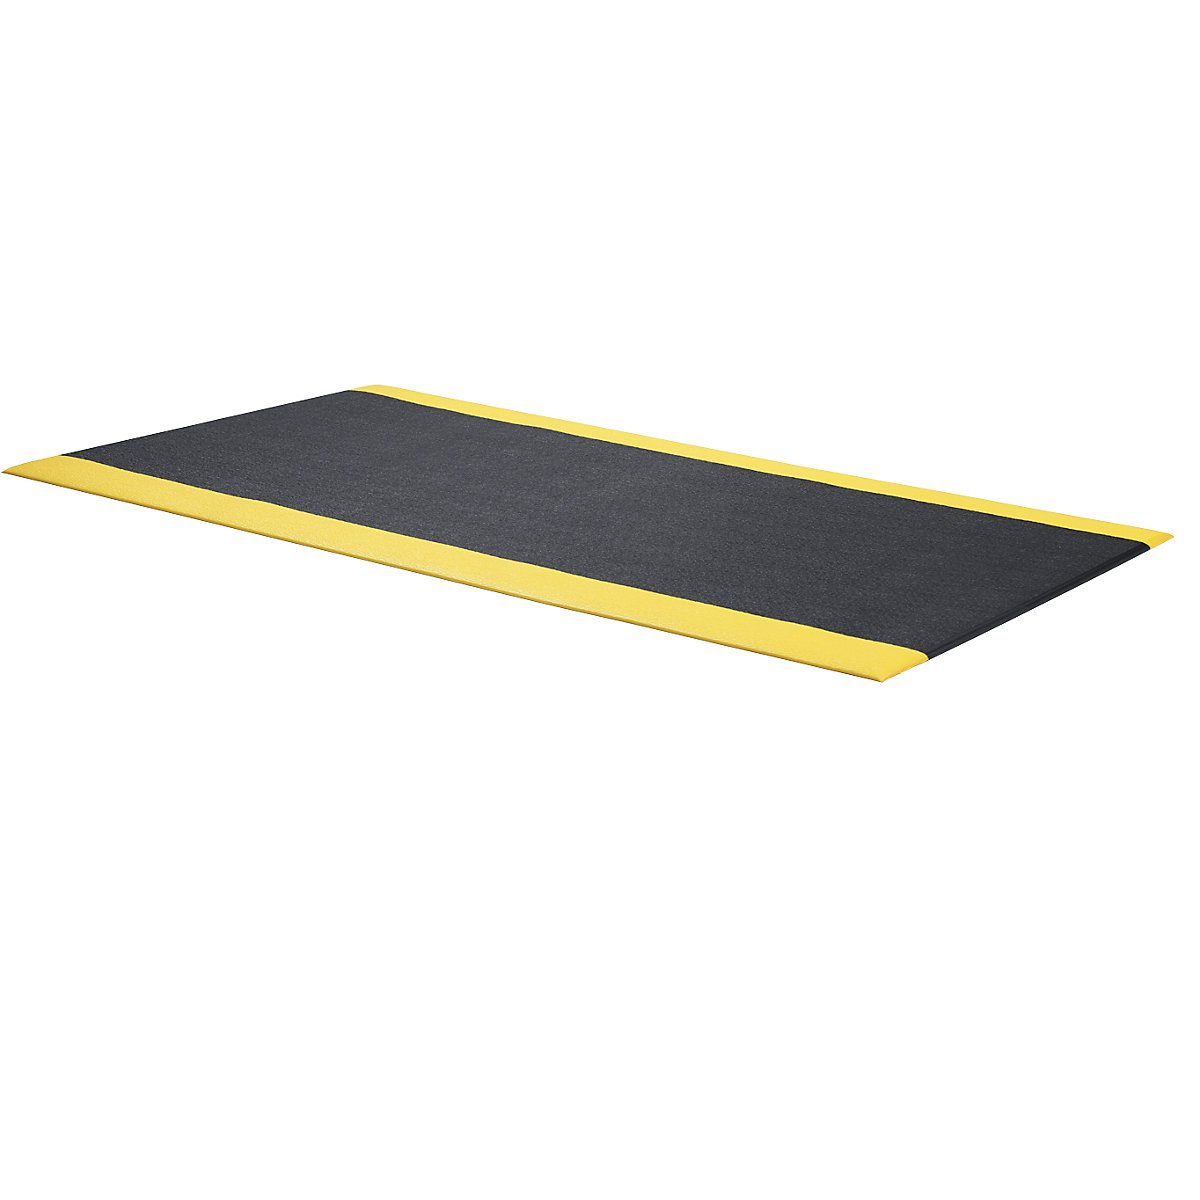 Orthomat® anti-fatigue matting, PVC with hammer tone effect, height 9 mm, 600 x 900 mm, black/yellow